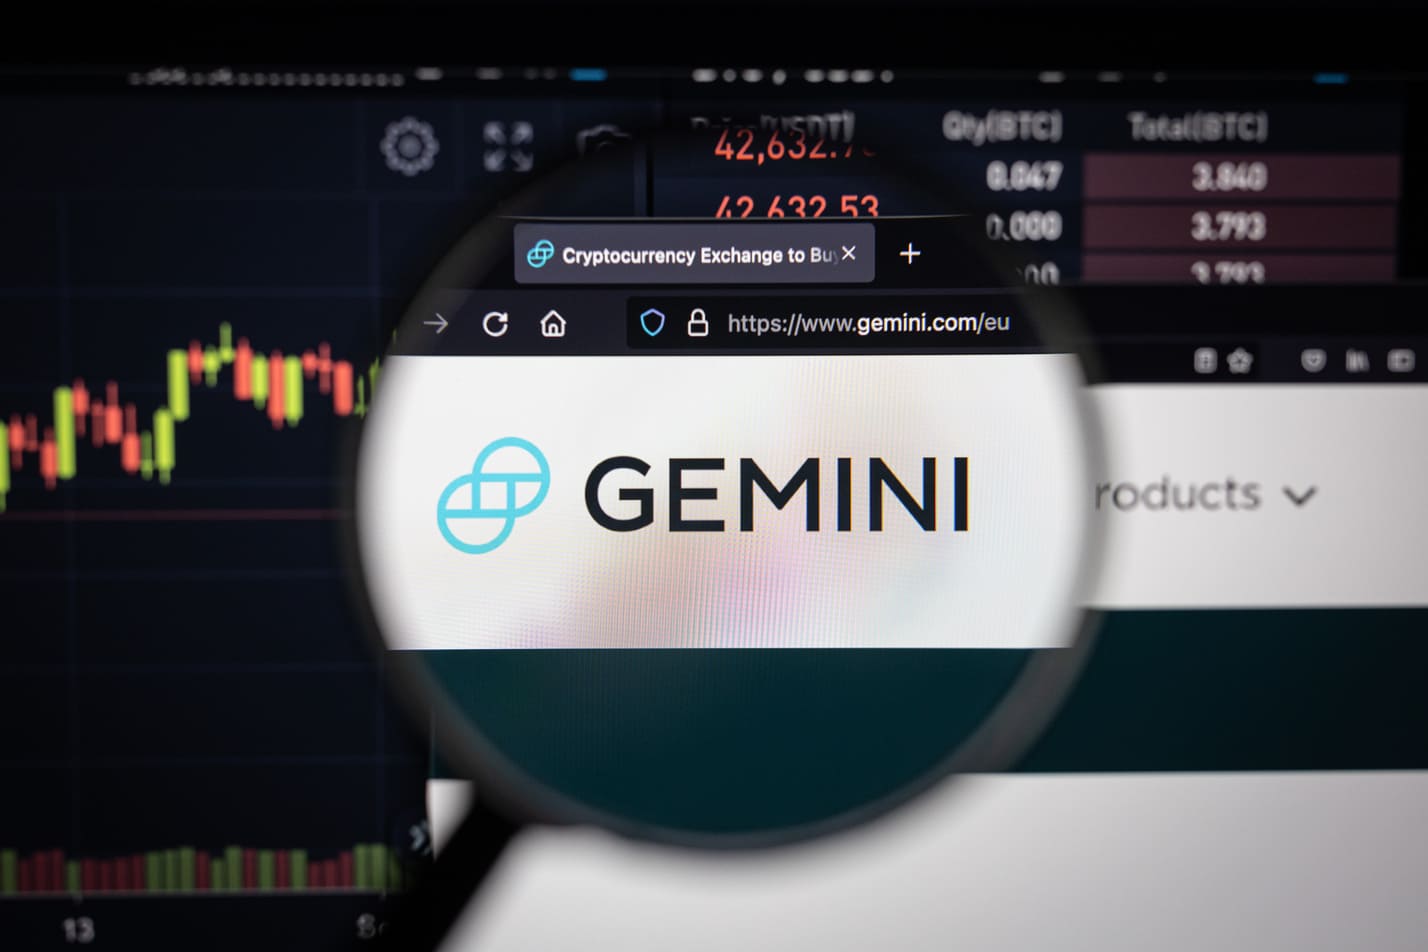 Gemini to slash 10% of its headcount